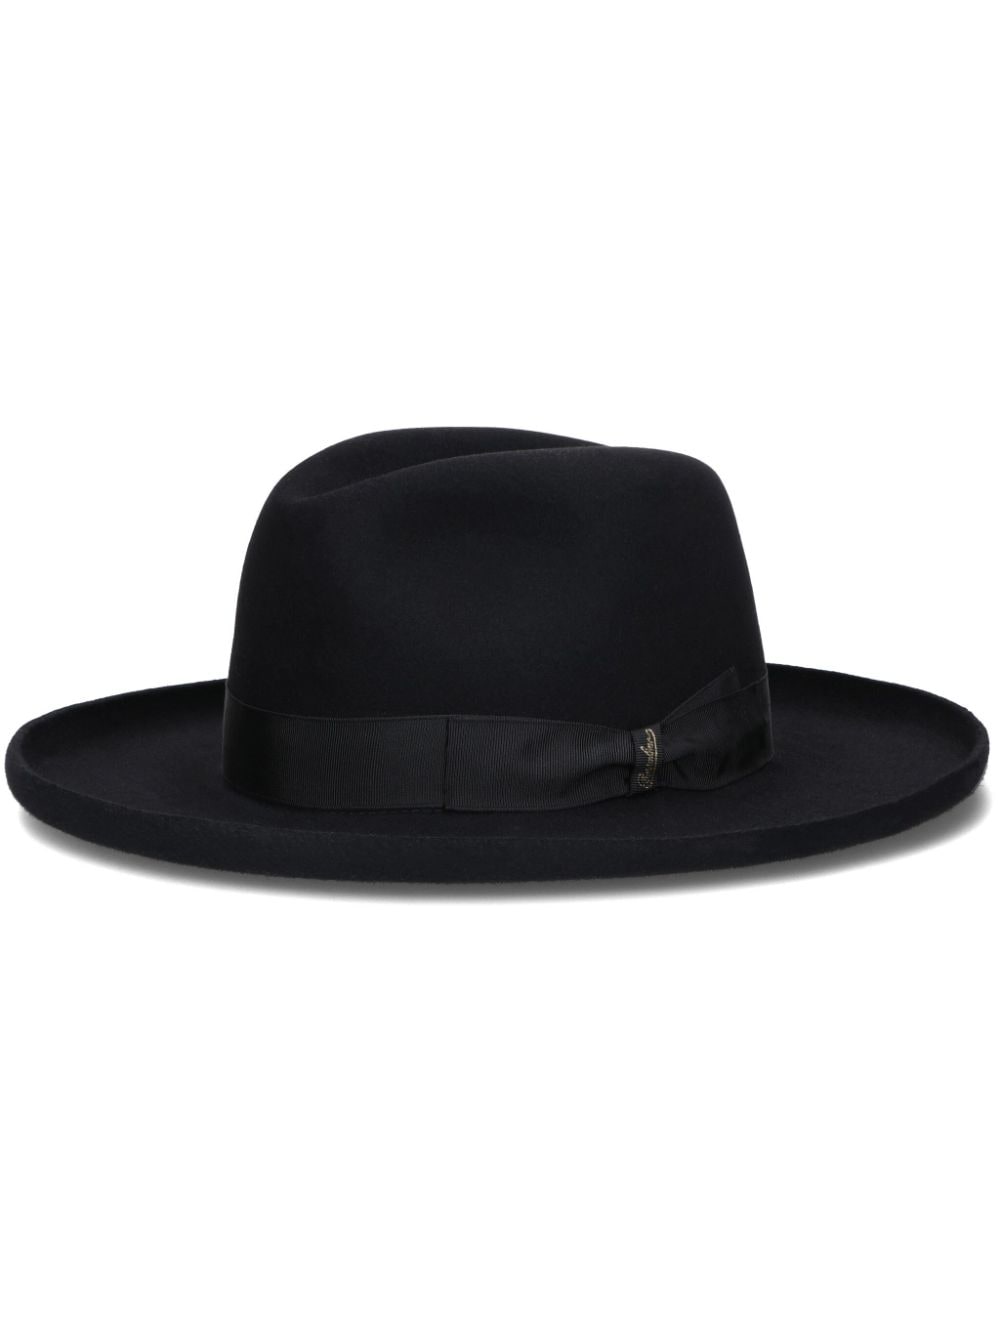 Borsalino Trilby felt hat - Black von Borsalino